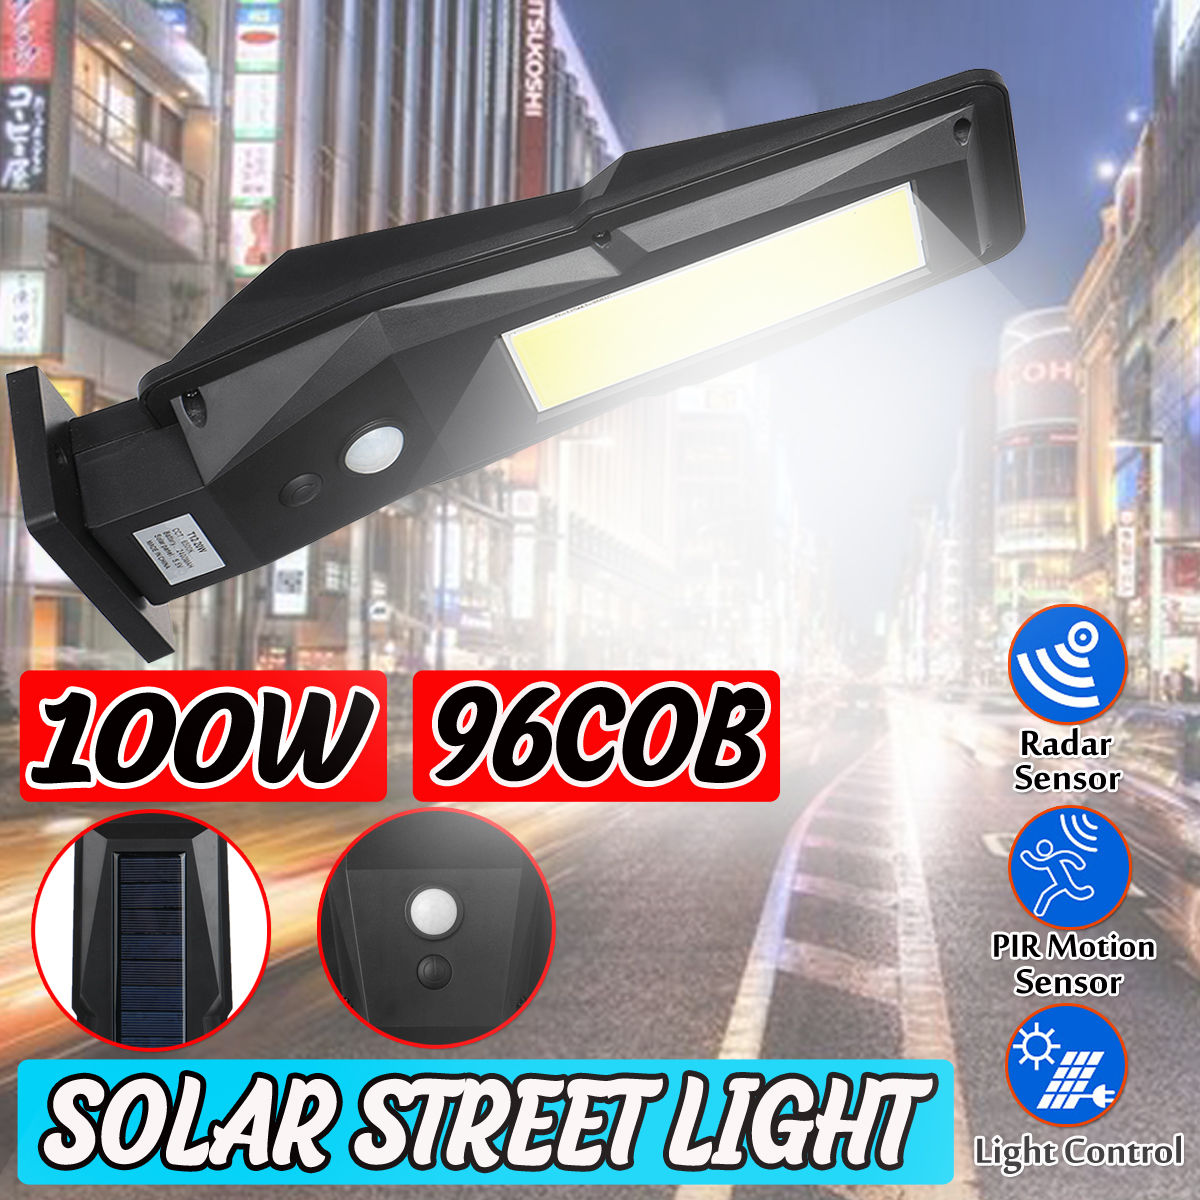 96COB-Solar-Street-Light-PIR-Motion-Sensor-Timing-Safety-Lamp-1654964-1